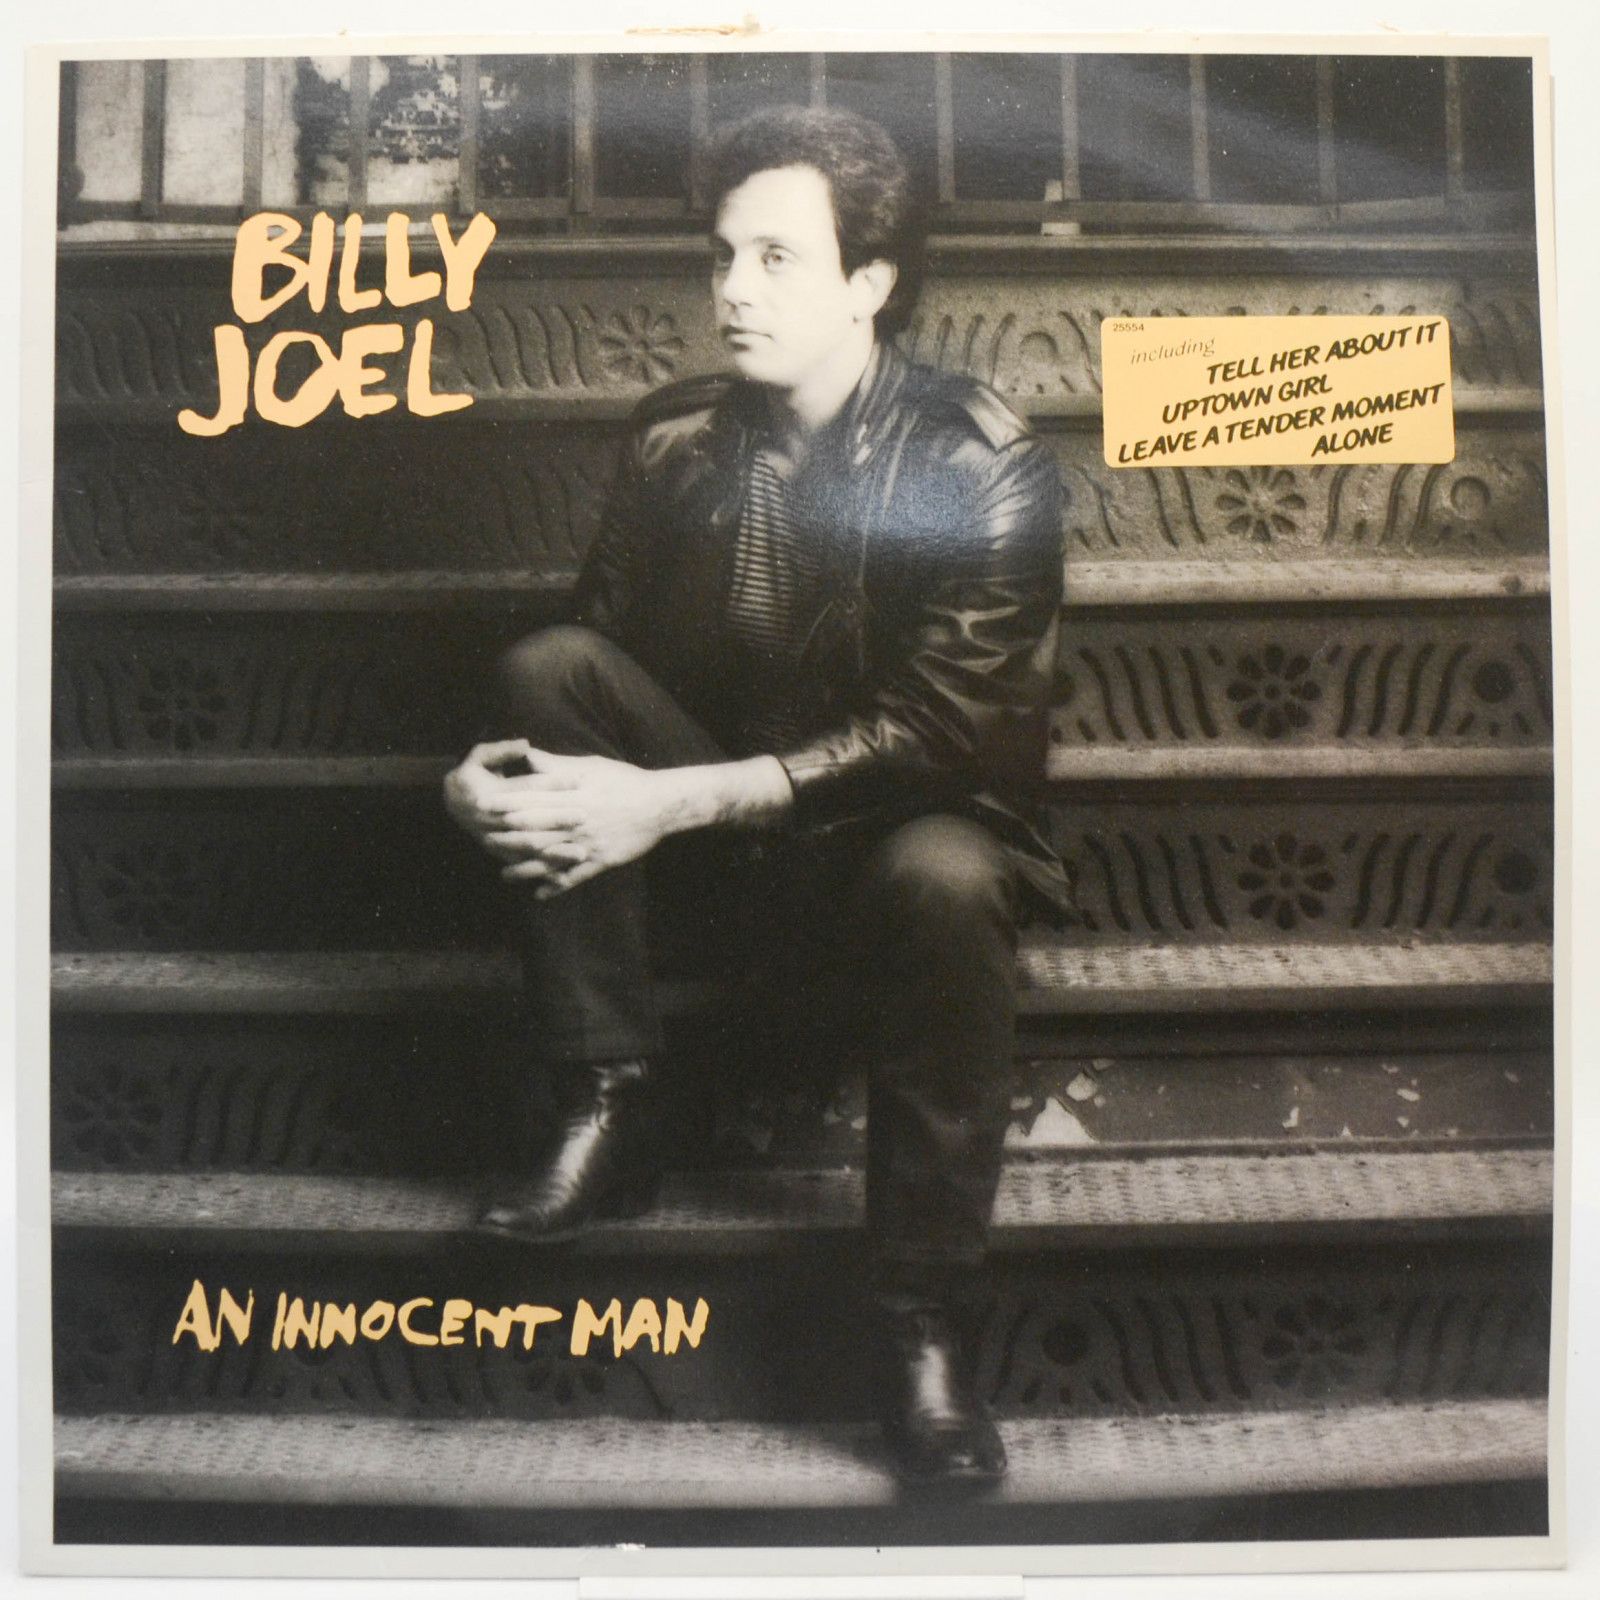 Billy Joel — An Innocent Man, 1983